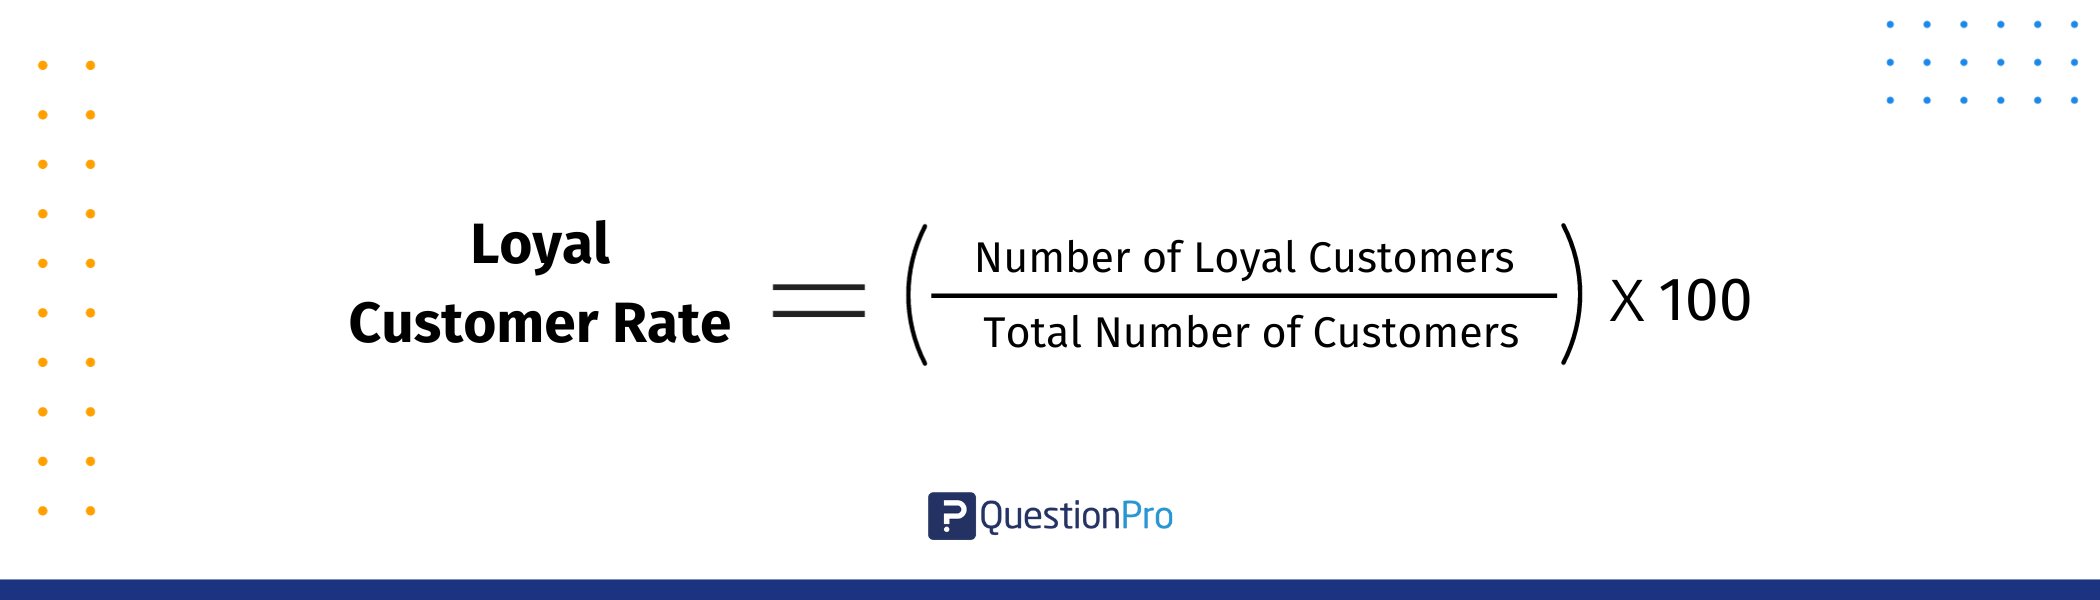 loyal-customer-rate